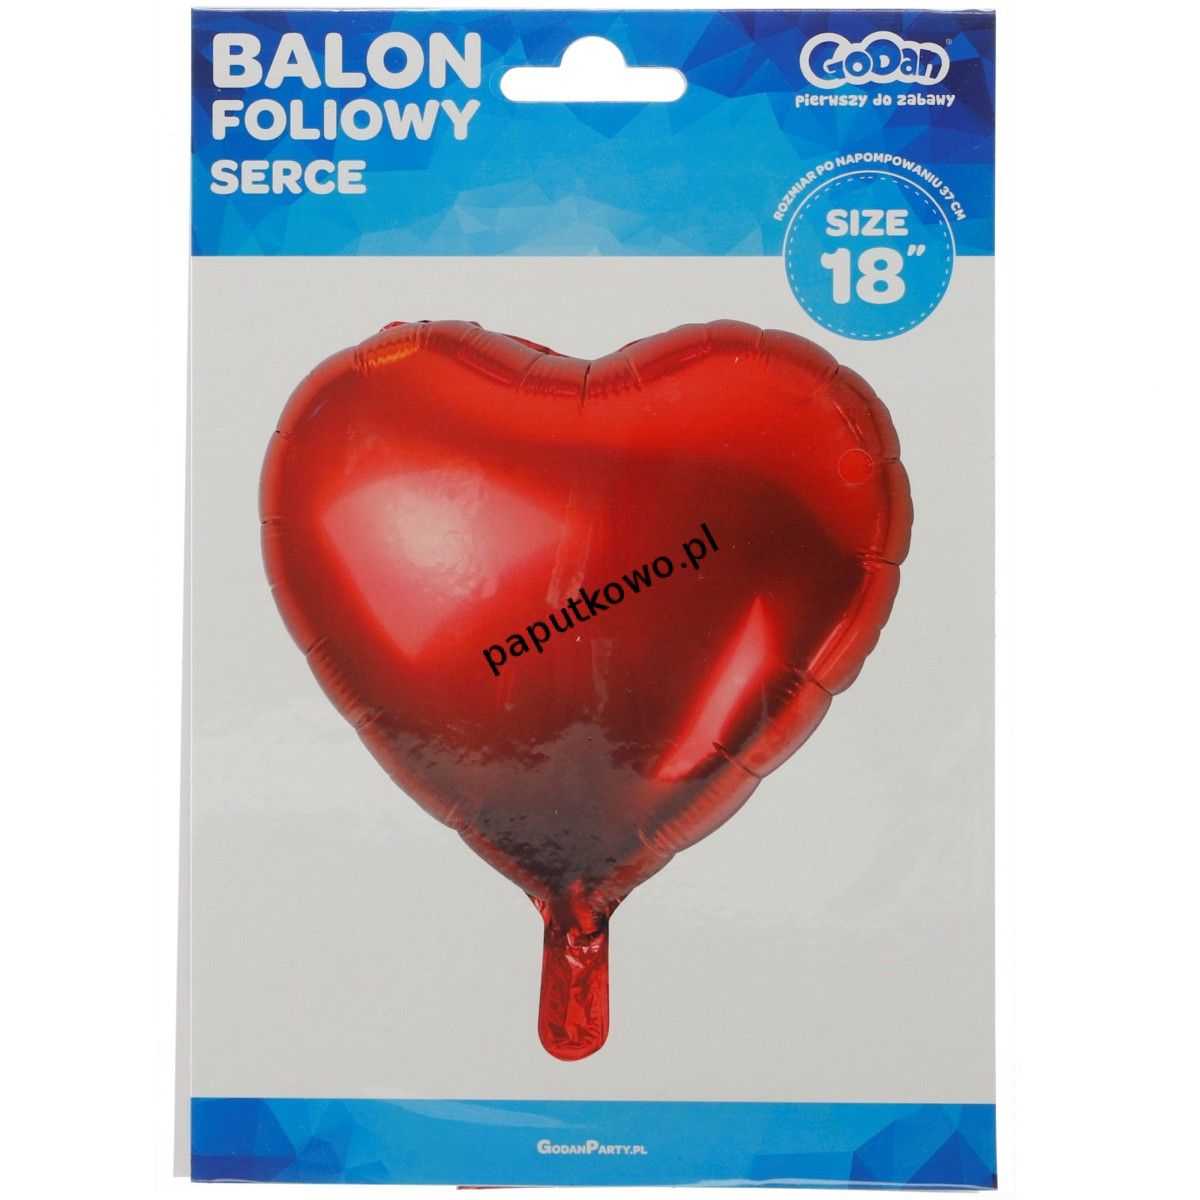 Balon foliowy Godan serce czerwone 18 cali 18cal (hs-s18cw)